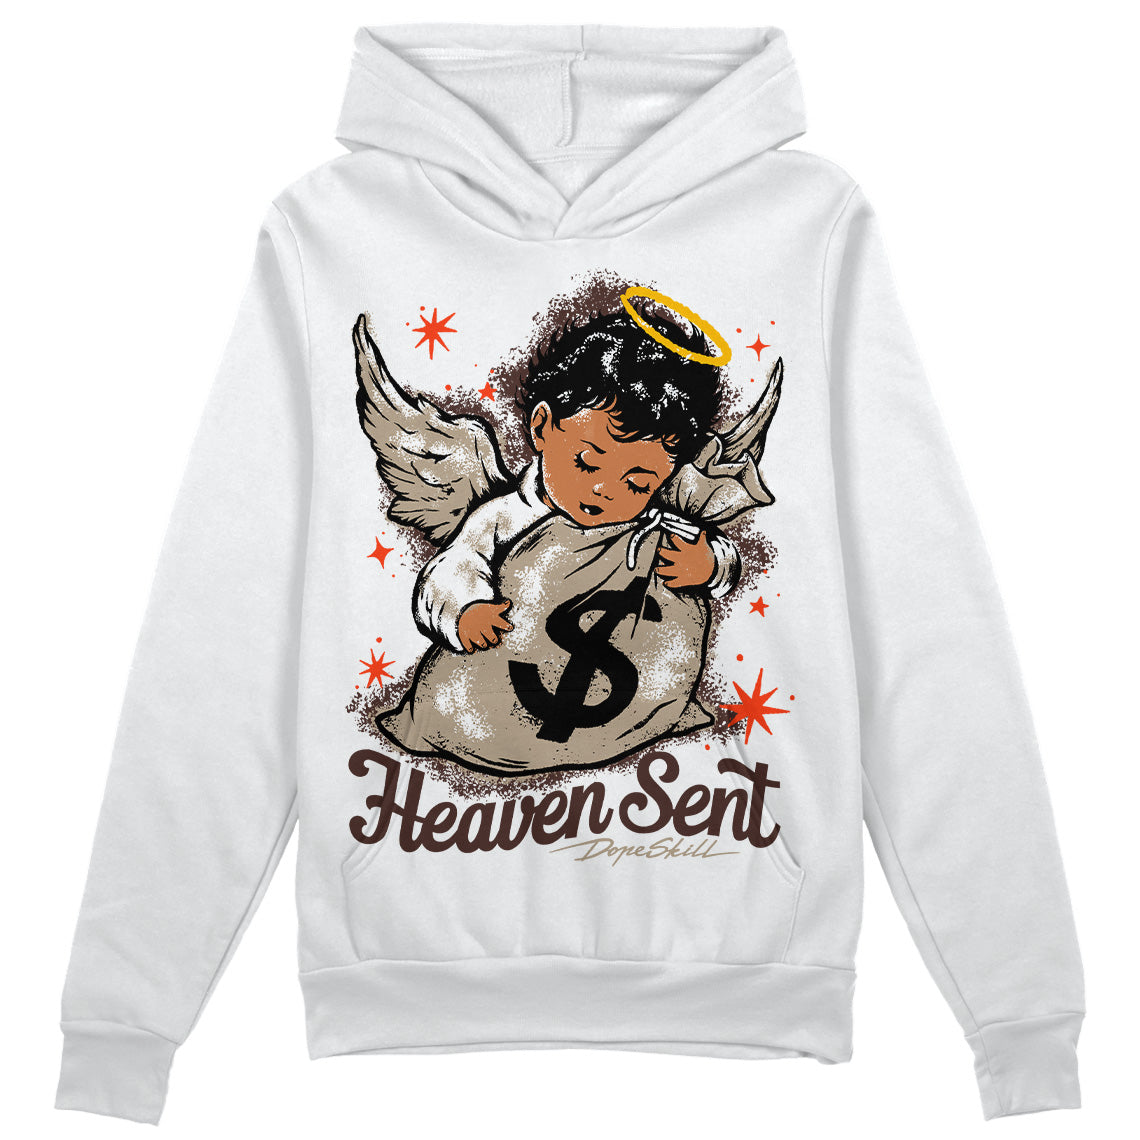 Jordan 1 High OG “Latte” DopeSkill Hoodie Sweatshirt Heaven Sent Graphic Streetwear - White 